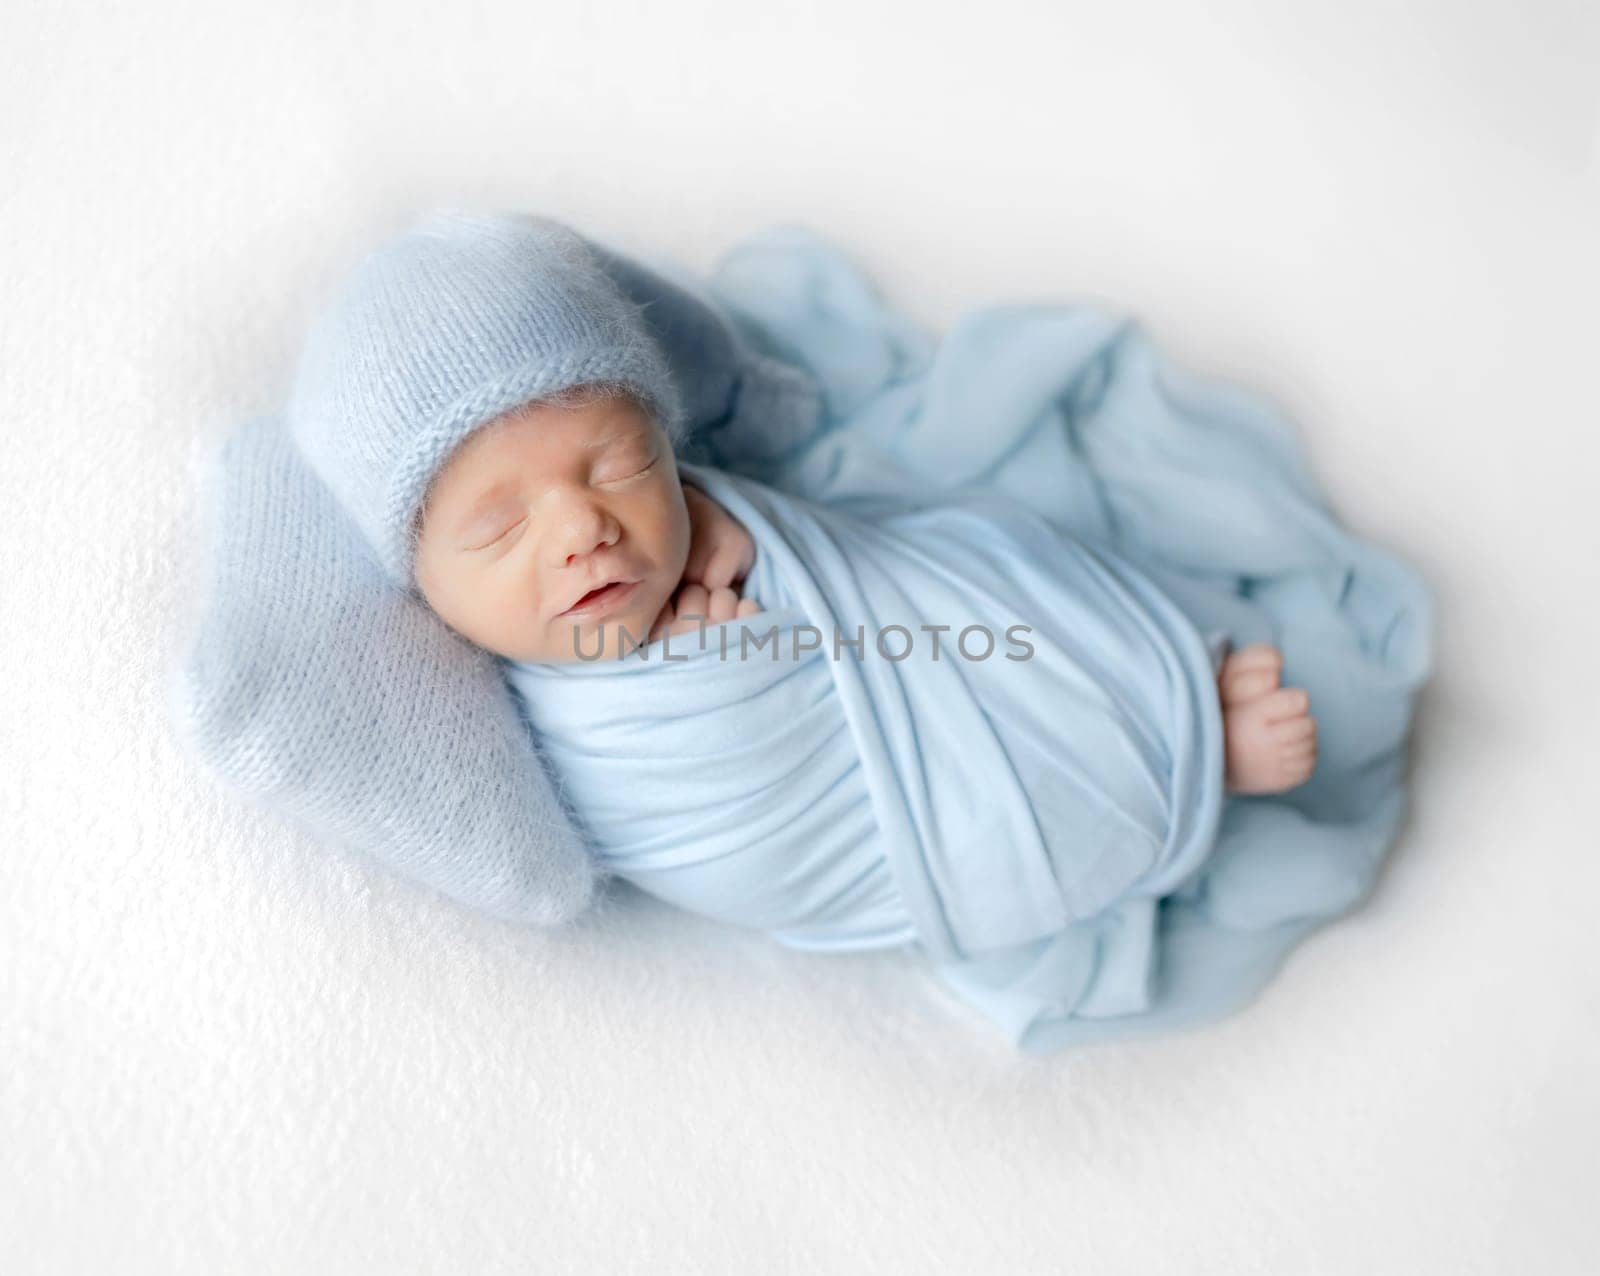 Newborn Baby In White Jumpsuit Sleeps During Studio Photoshoot